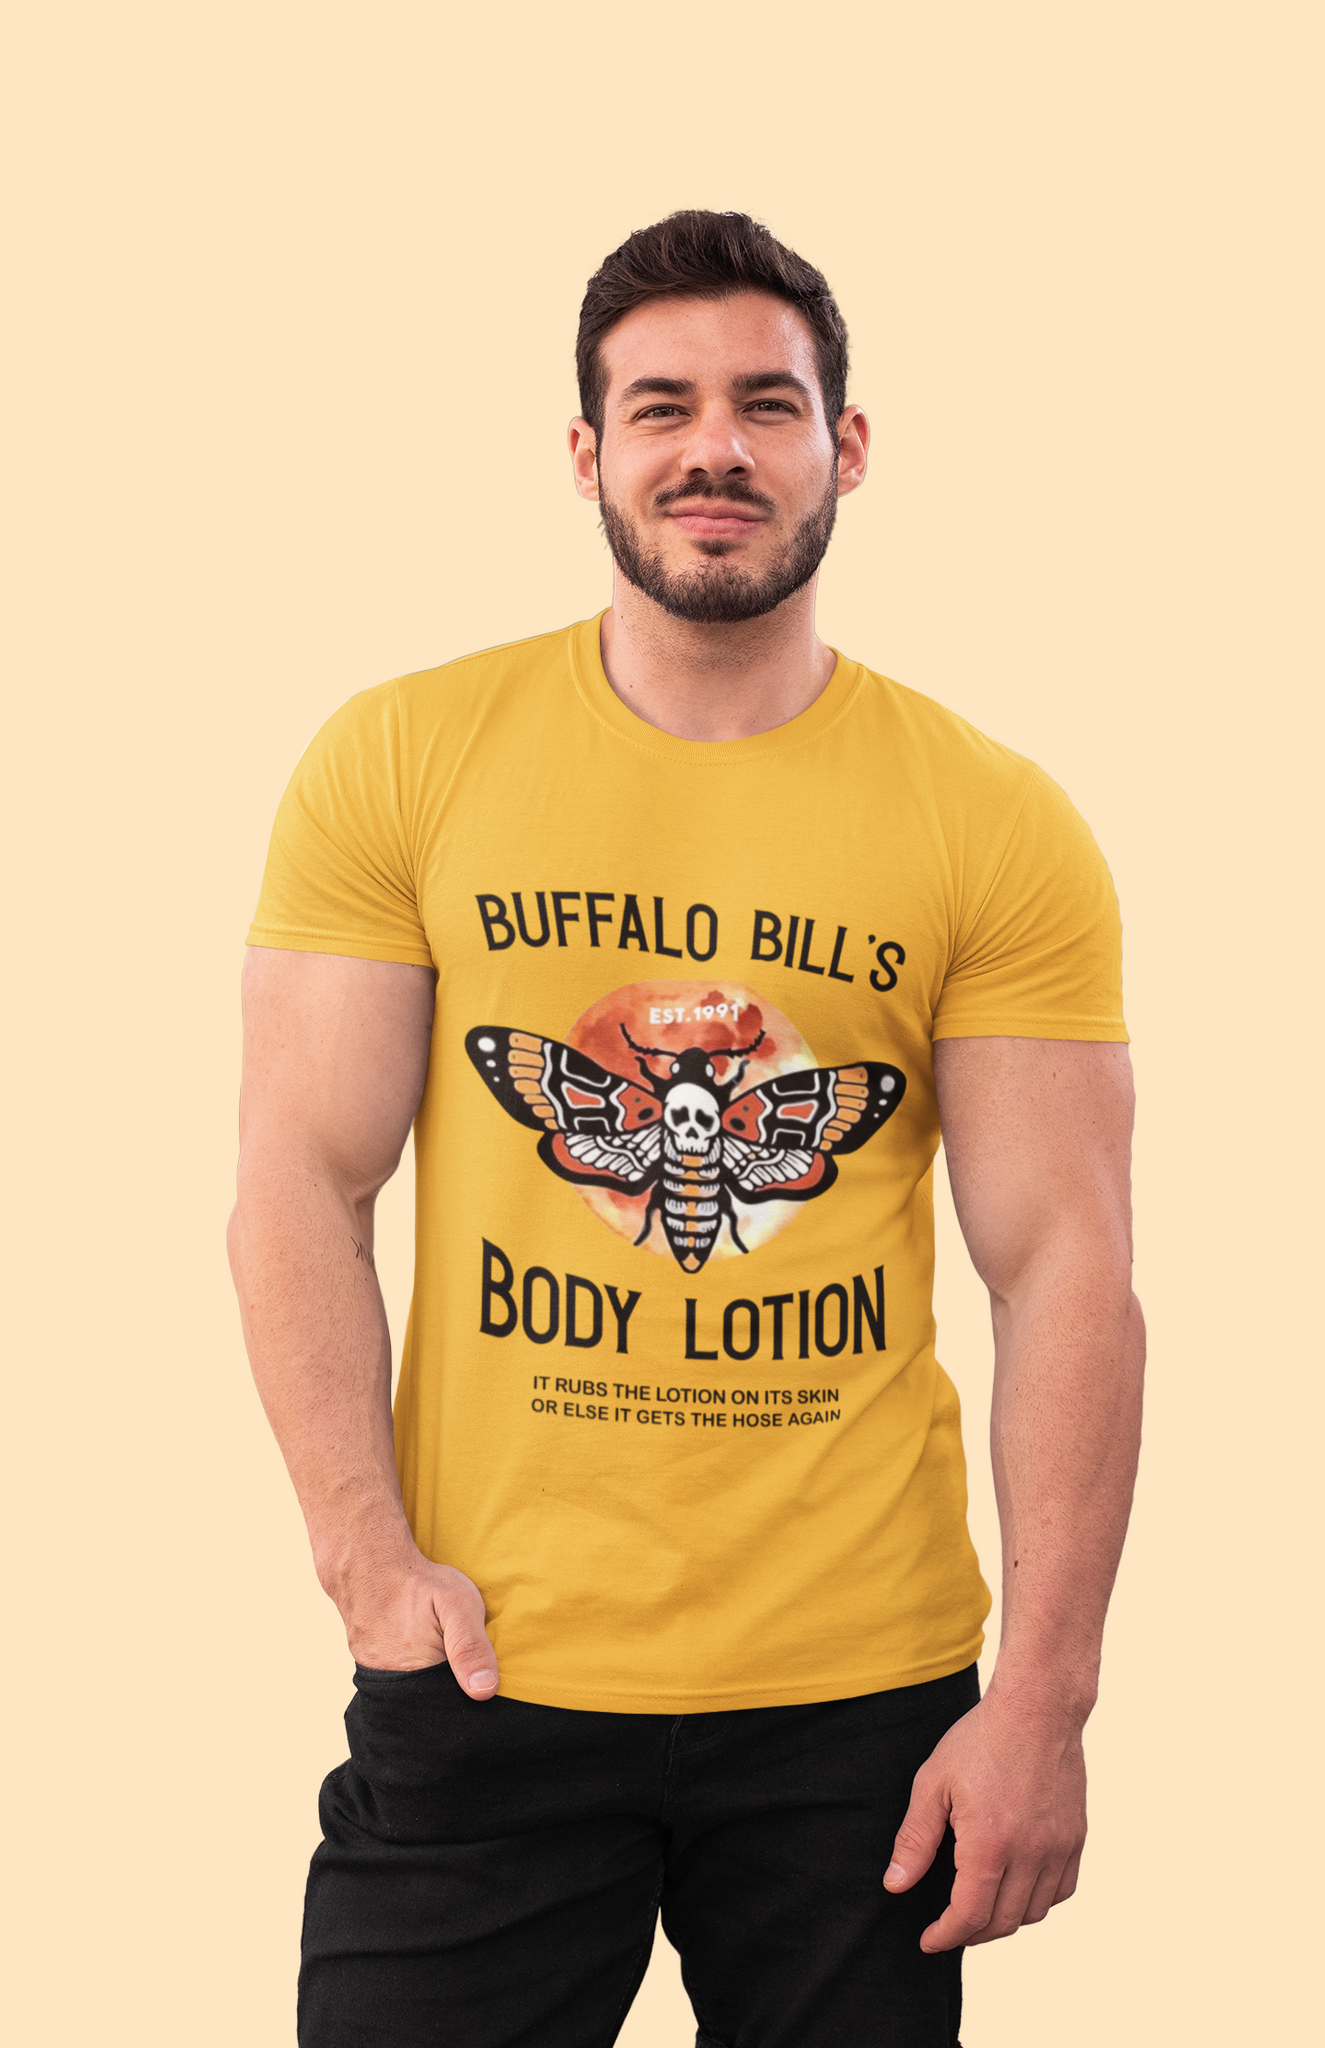 Silence Of The Lamb T Shirt, It Rubs The Lotion On Its Skin Tshirt, Buffalo Bills Body Lotion T Shirt, Halloween Gifts